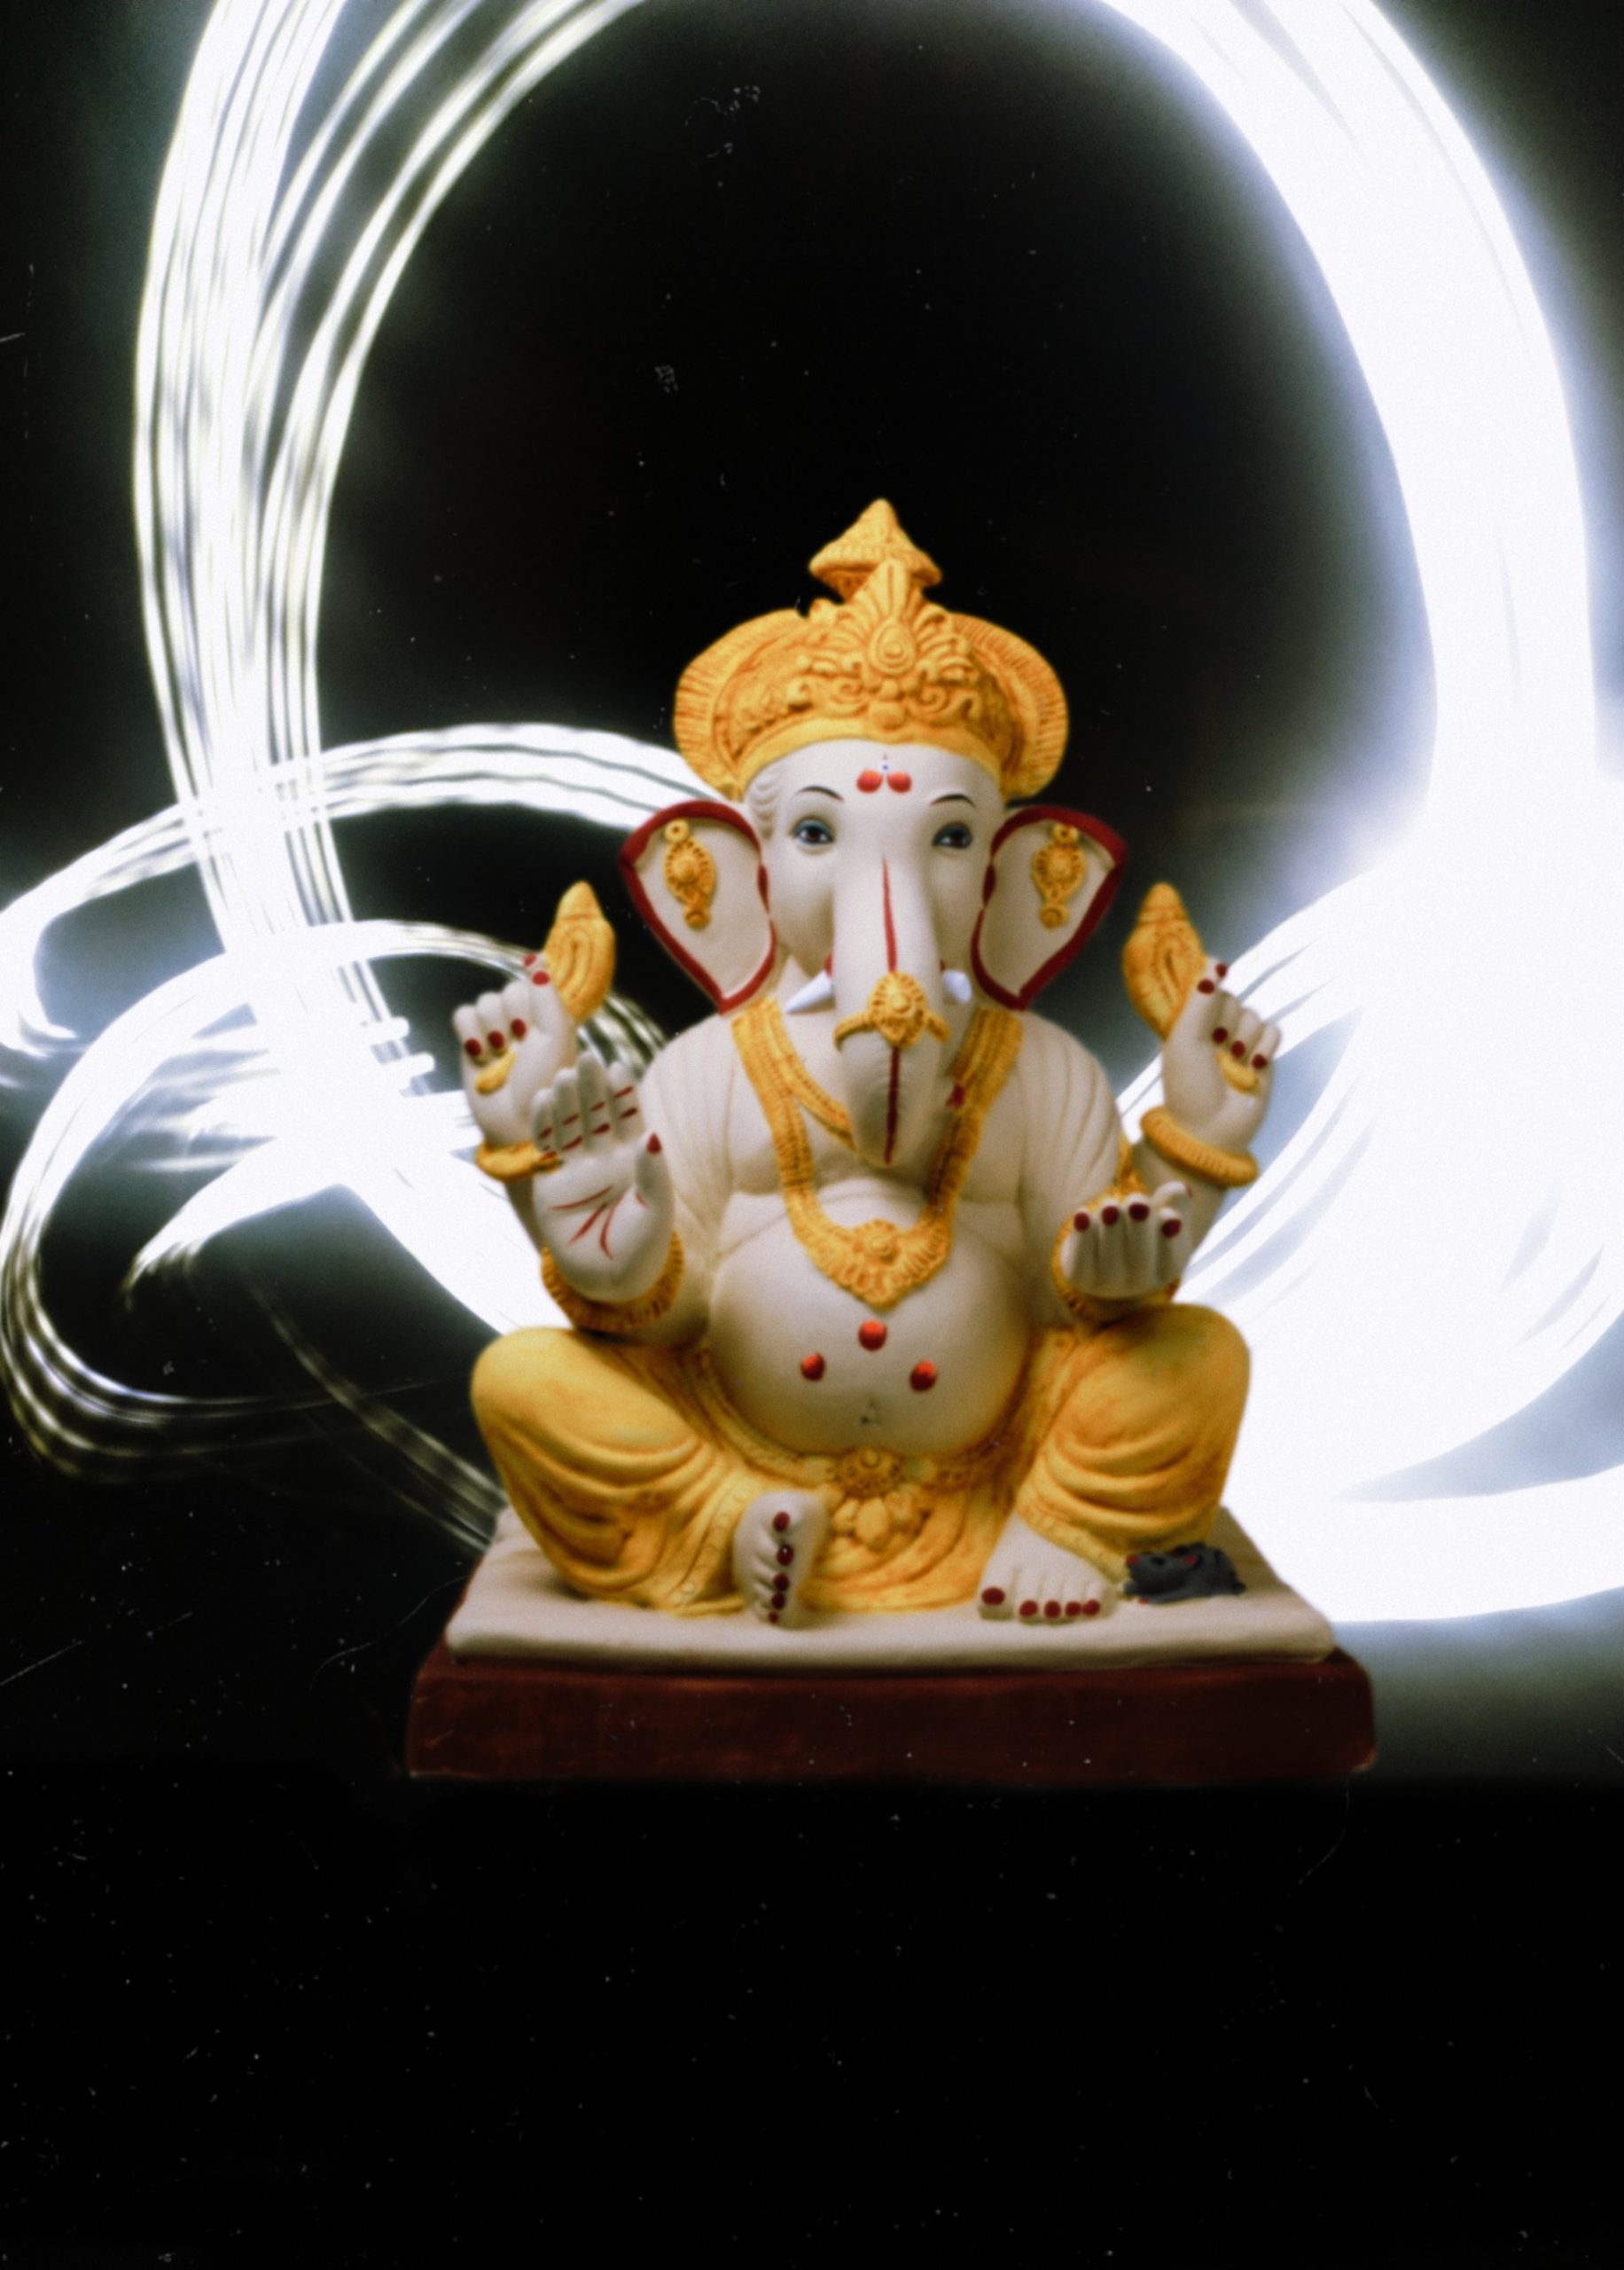 An idol of Hindu god